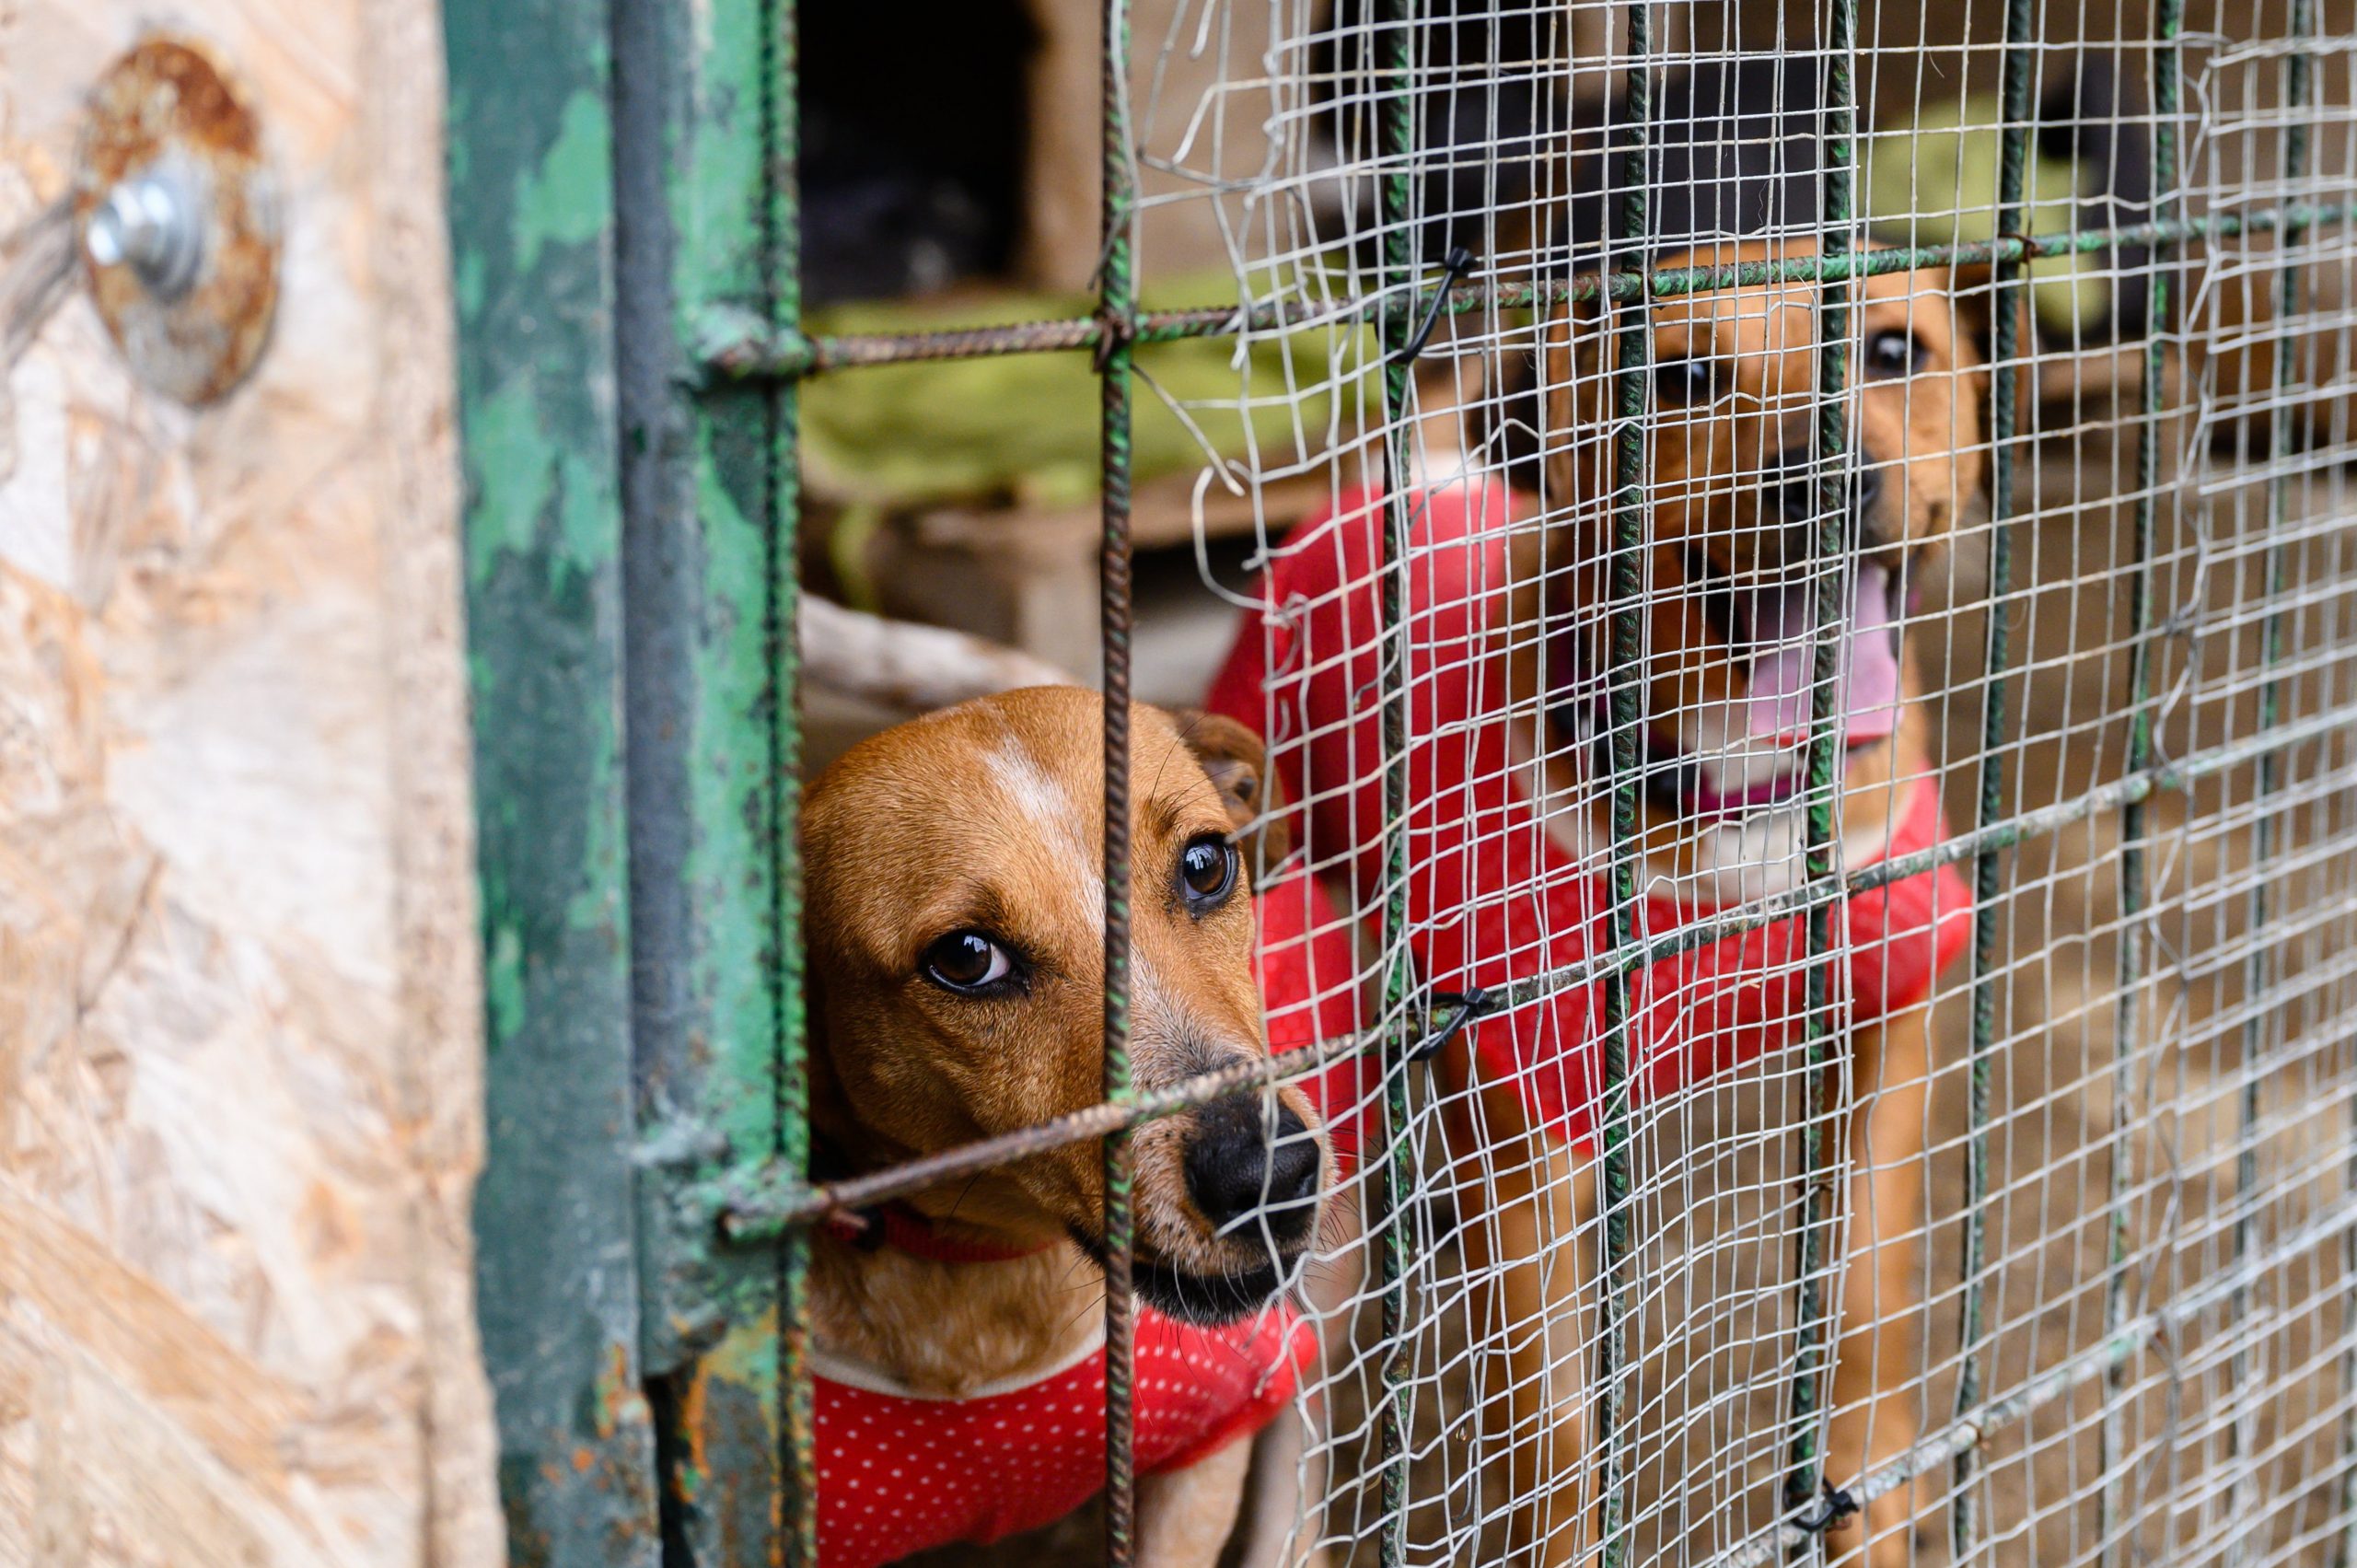 Animal welfare laws toughen in Hungary